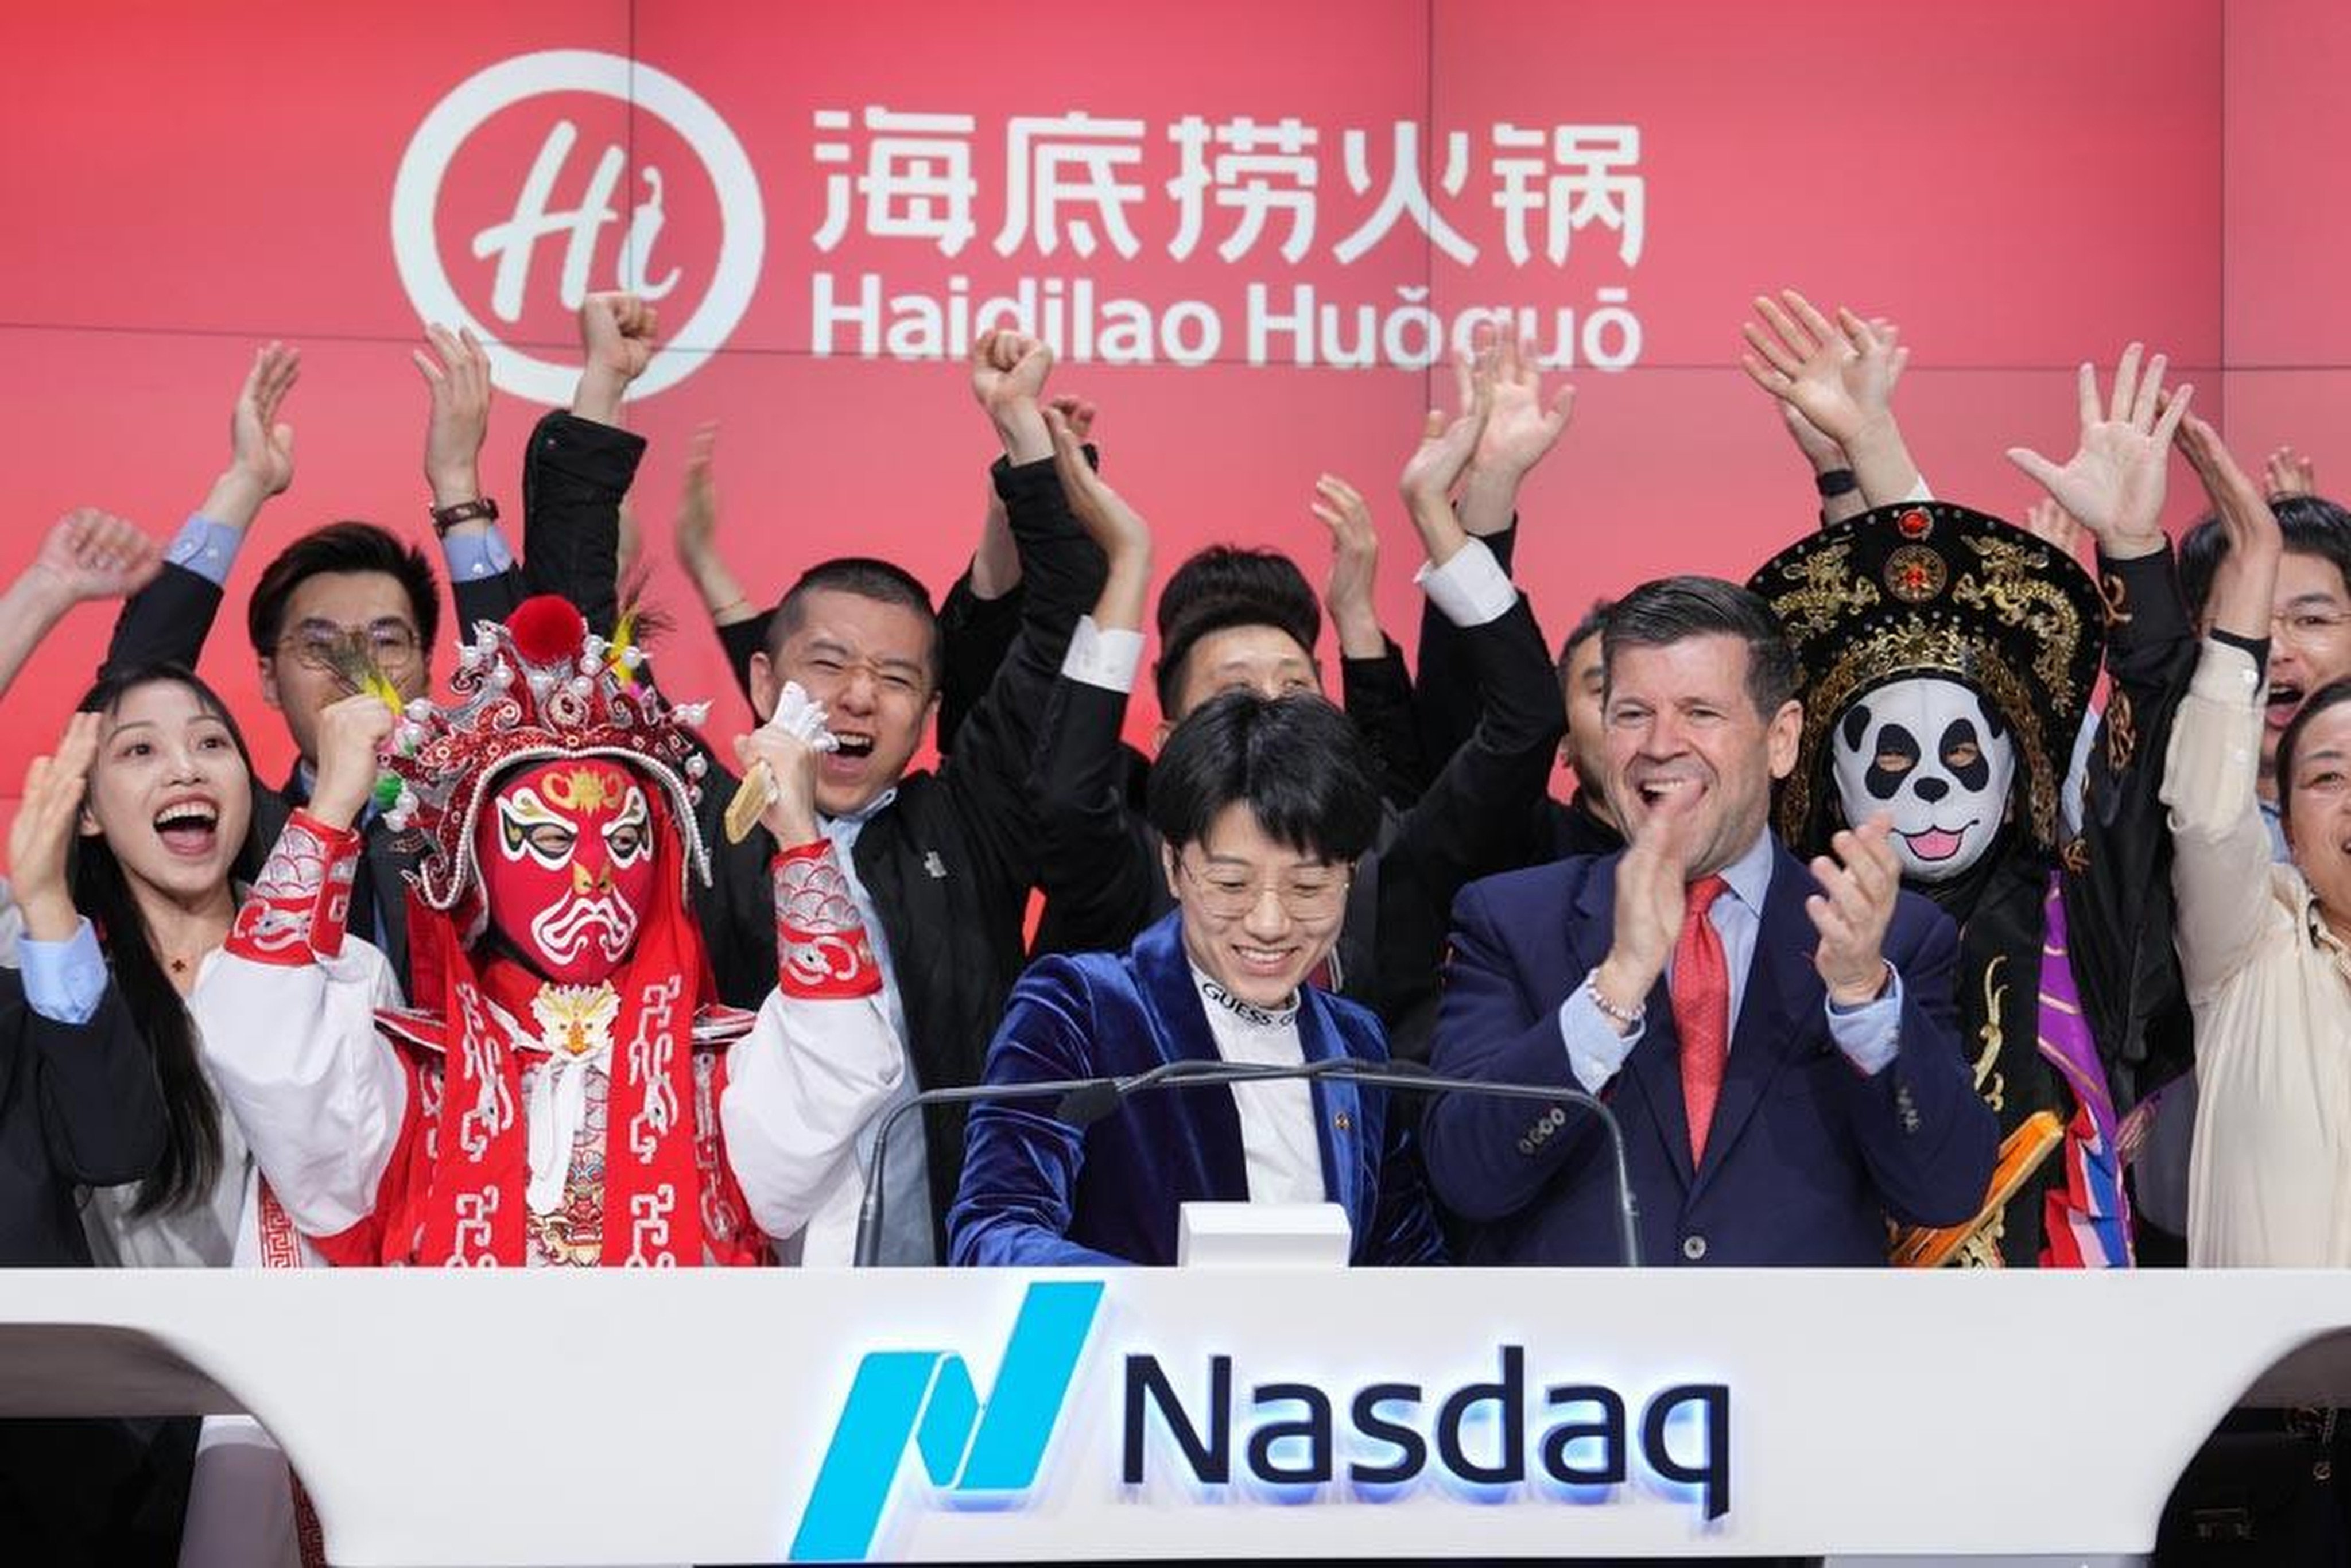 Super Hi International Holding, the operator of the Haidilao hotpot chain, listed on Nasdaq recently. Photo: Nasdaq